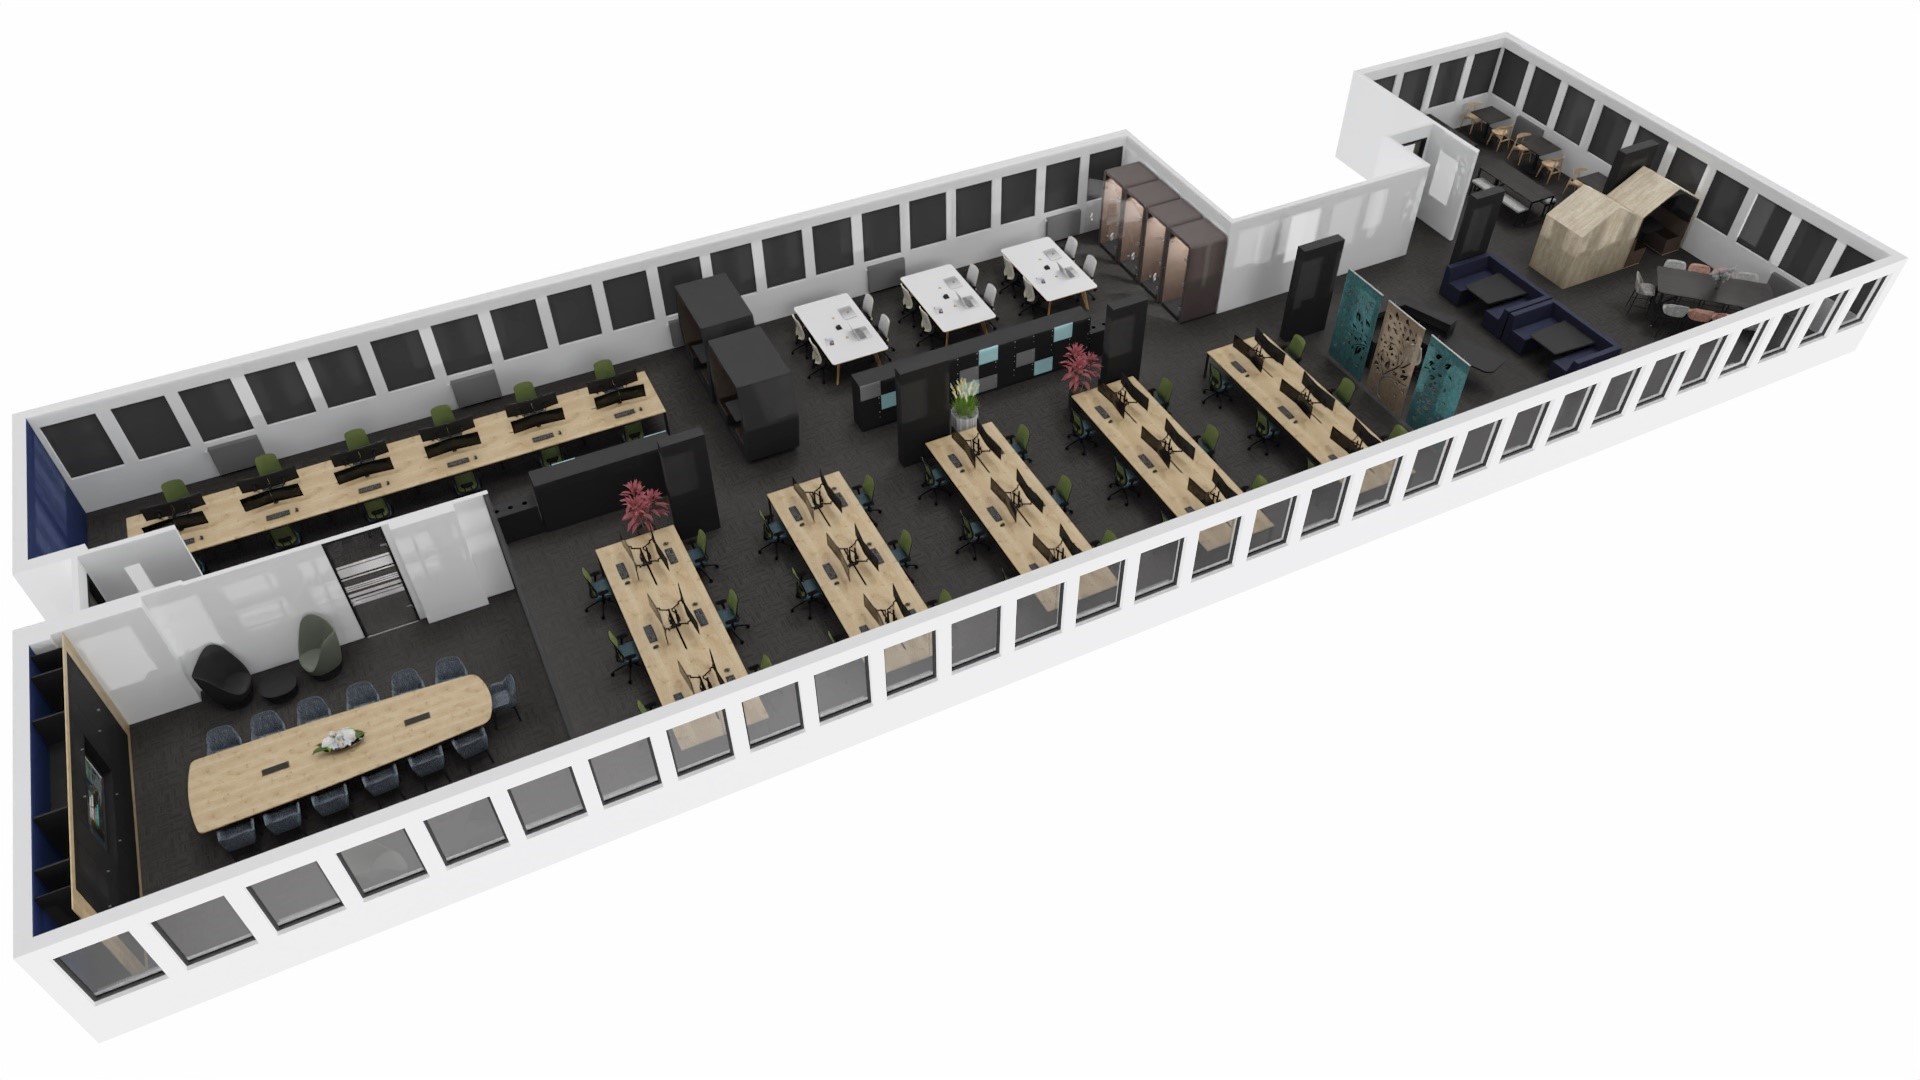 A 3D render of an office layout.